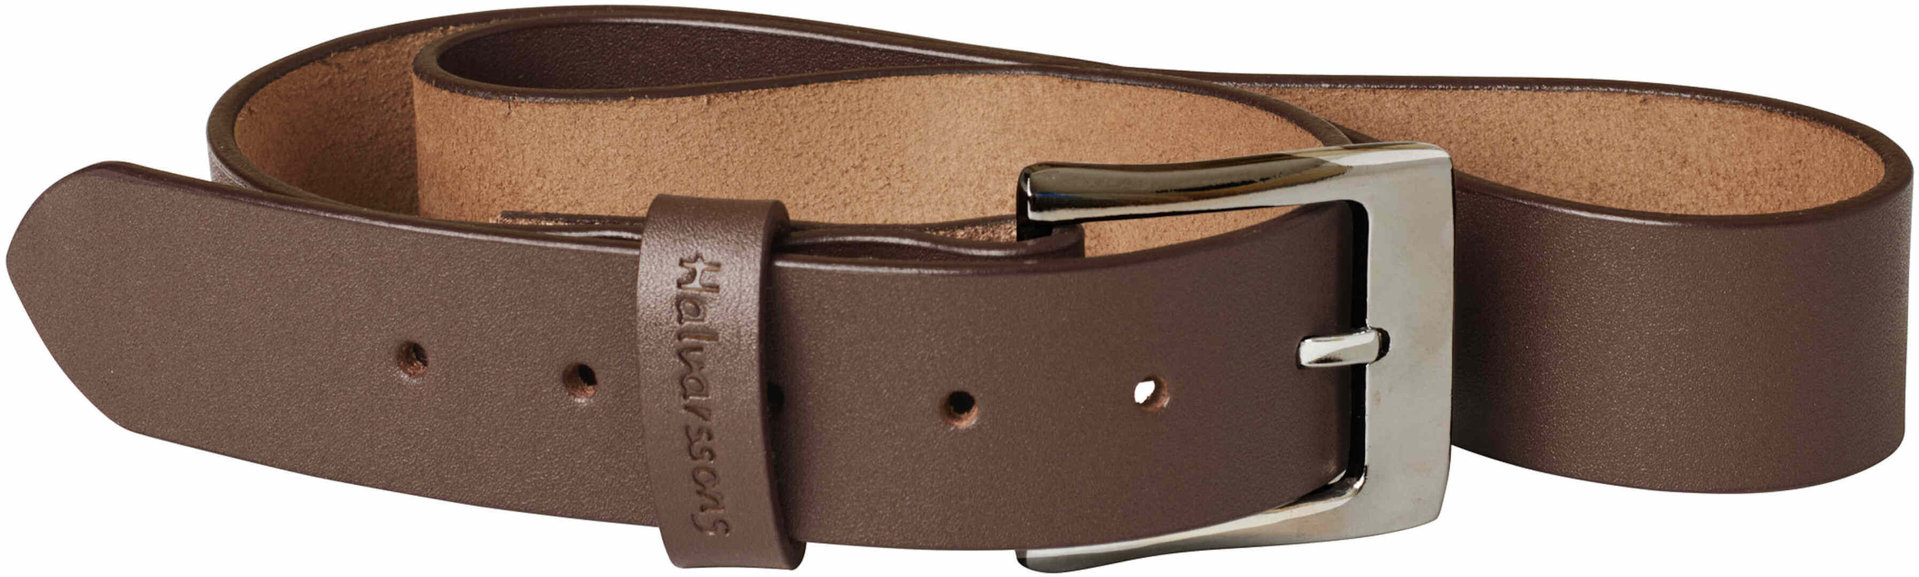 Image of Halvarssons Leather Cintura, marrone, dimensione S